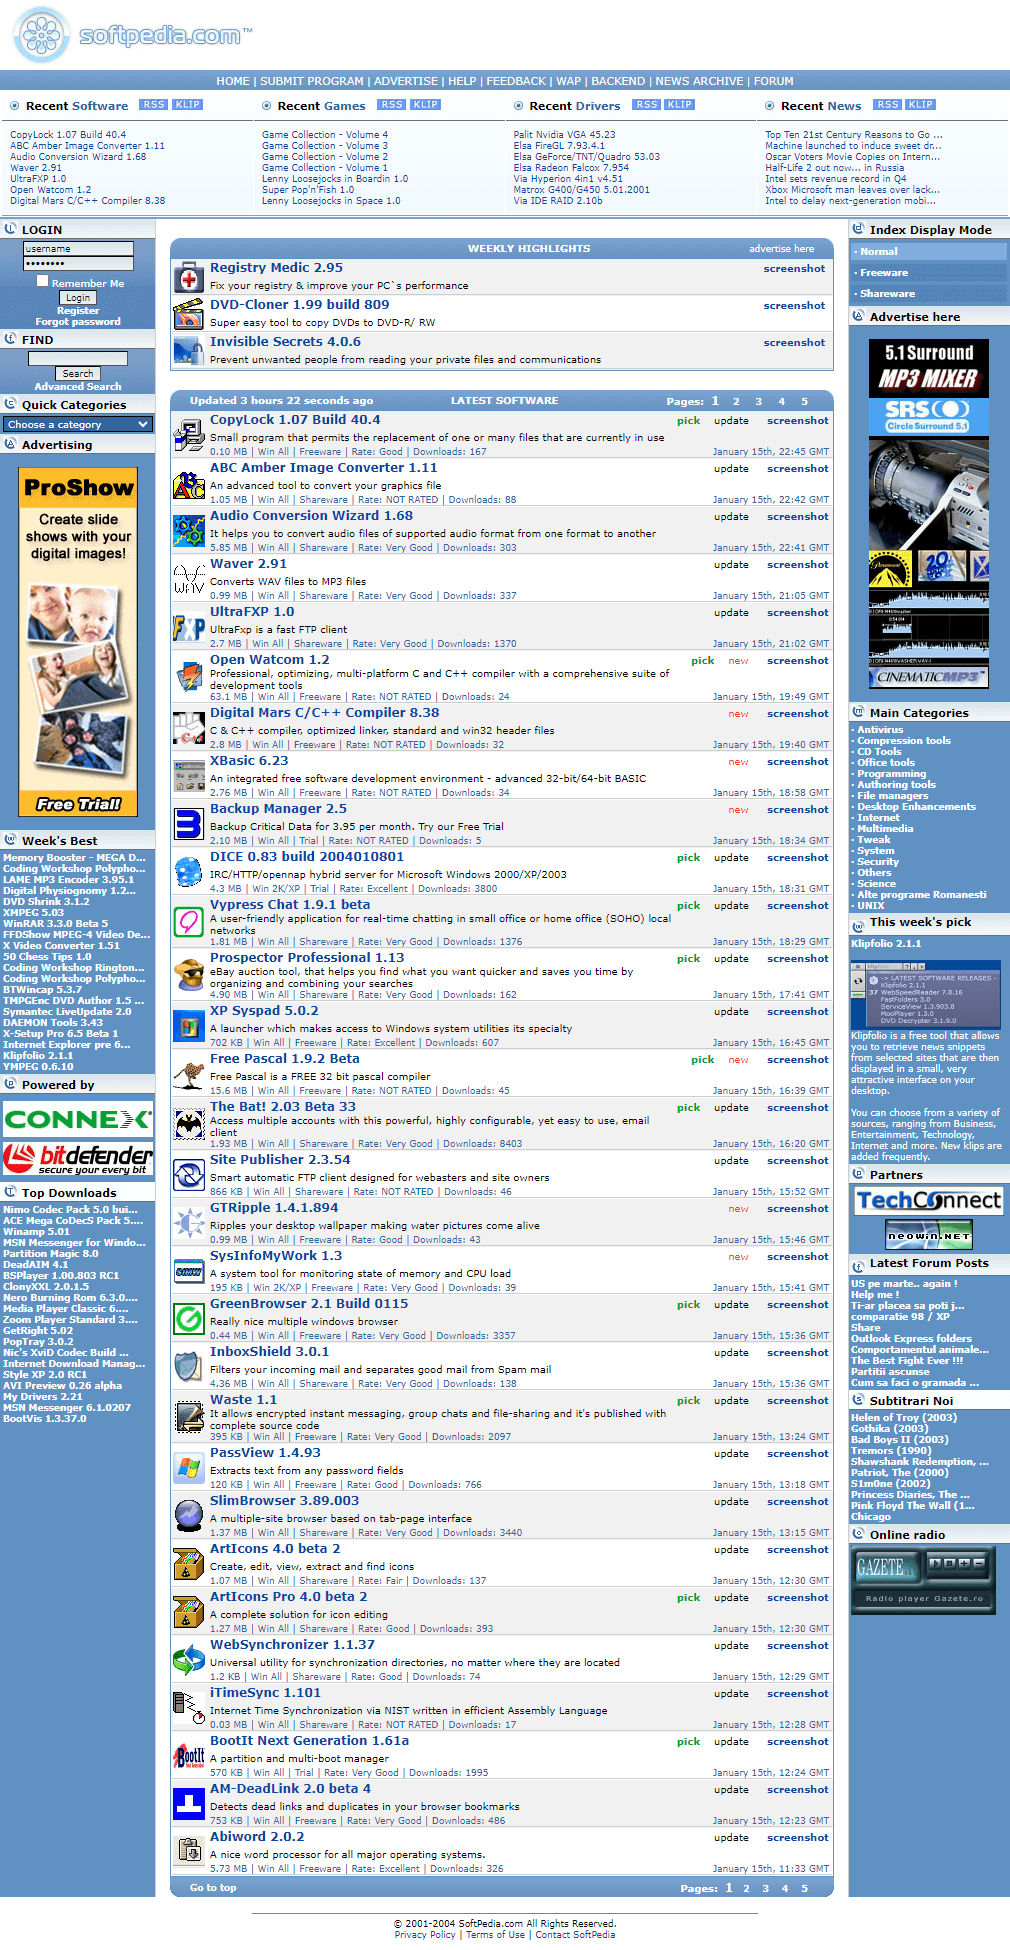 SoftPedia website in 2004